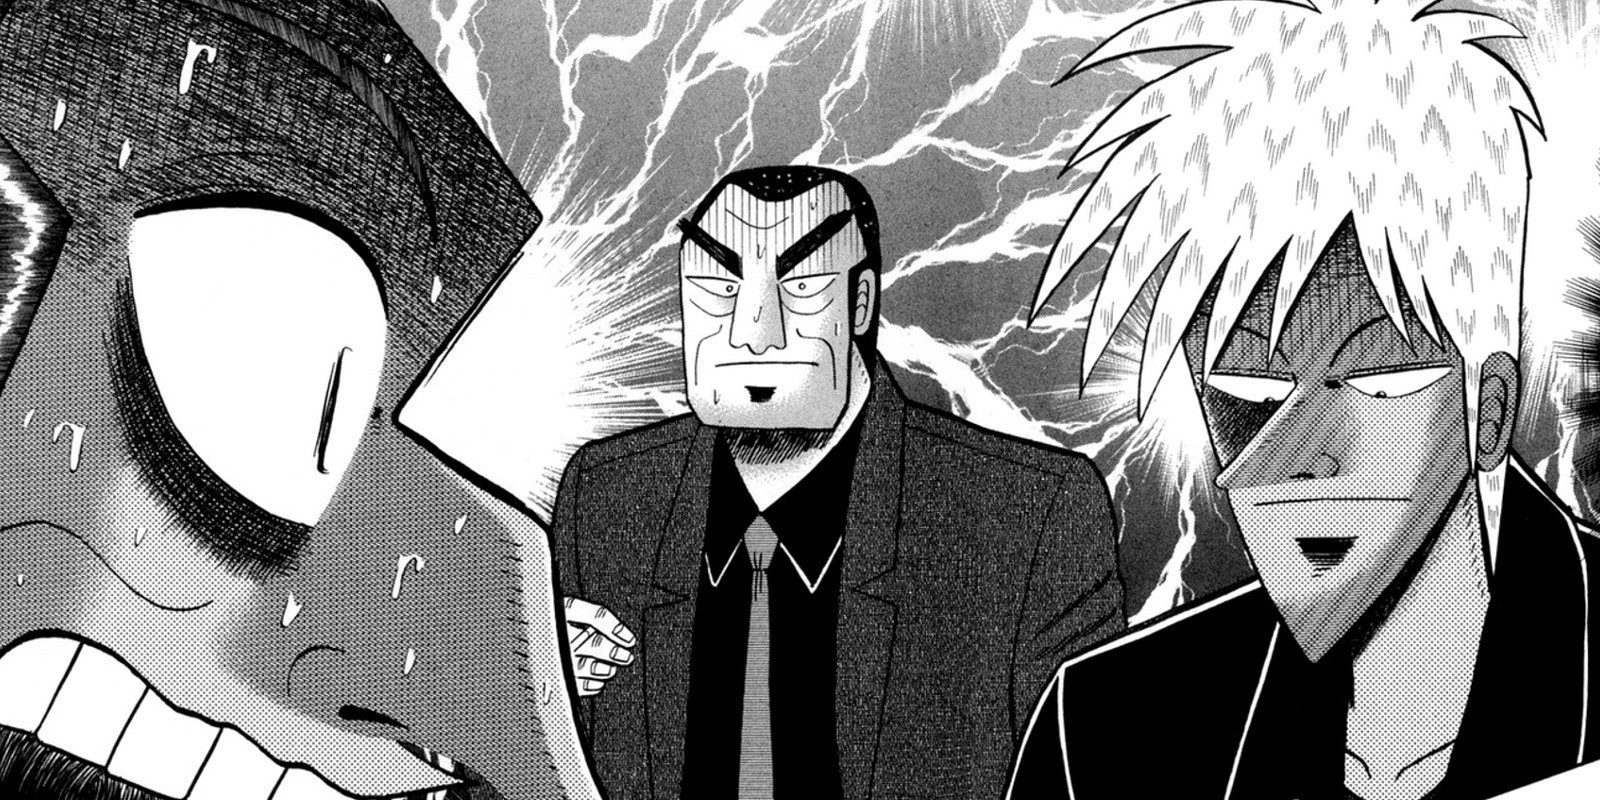 El creador de 'Kaiji' termina una partida de mahjong que se inició hace 20 años en el manga 'Akagi'